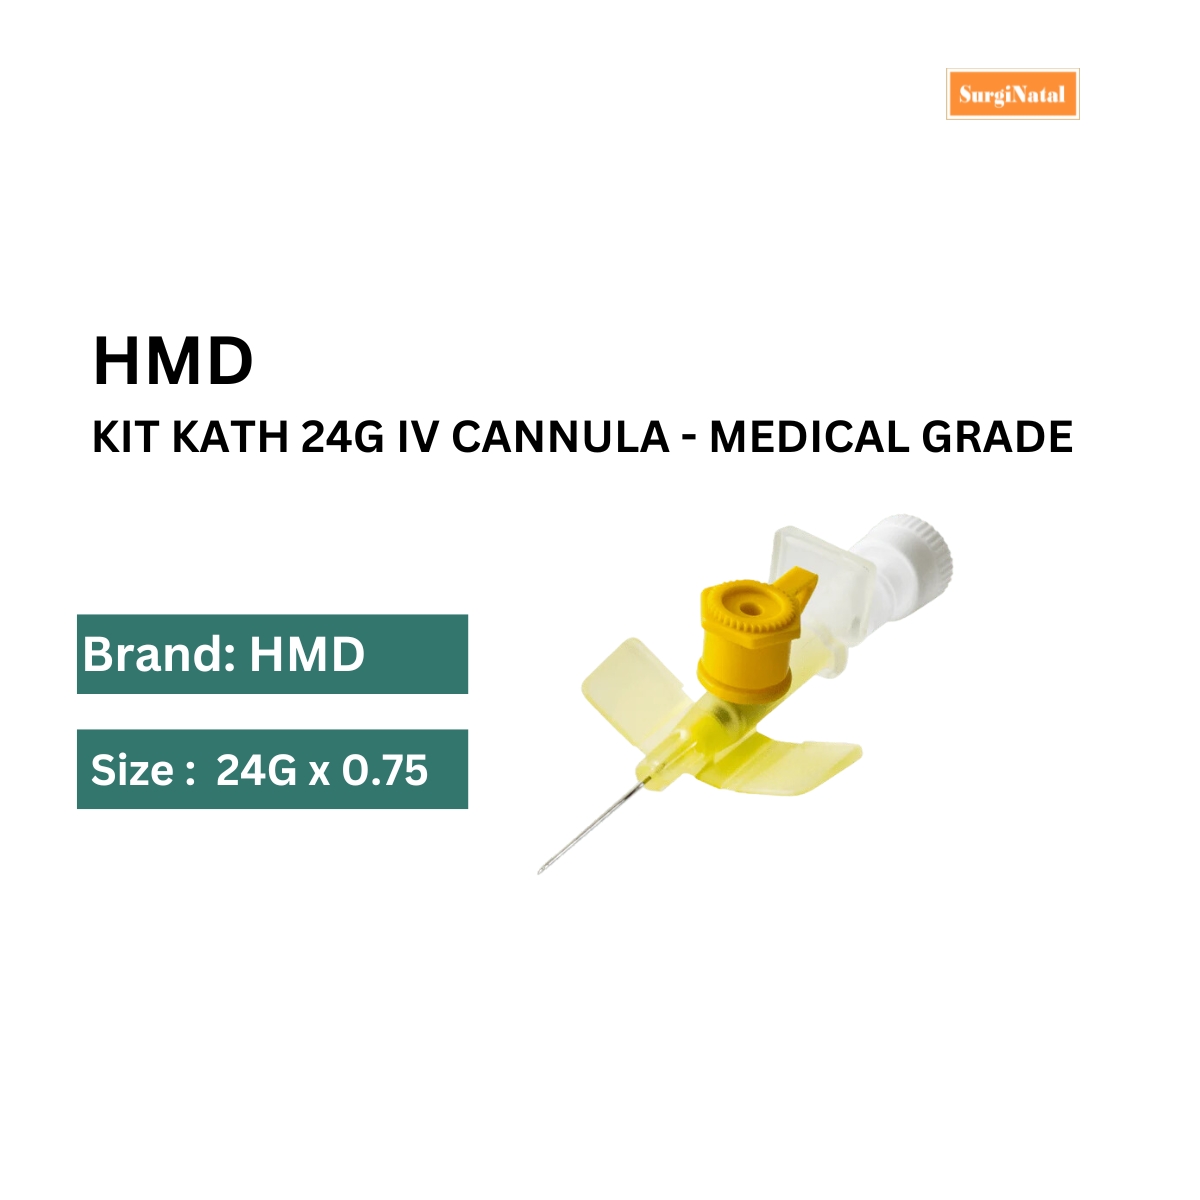 hmd kit kath 24g iv cannula - medical grade